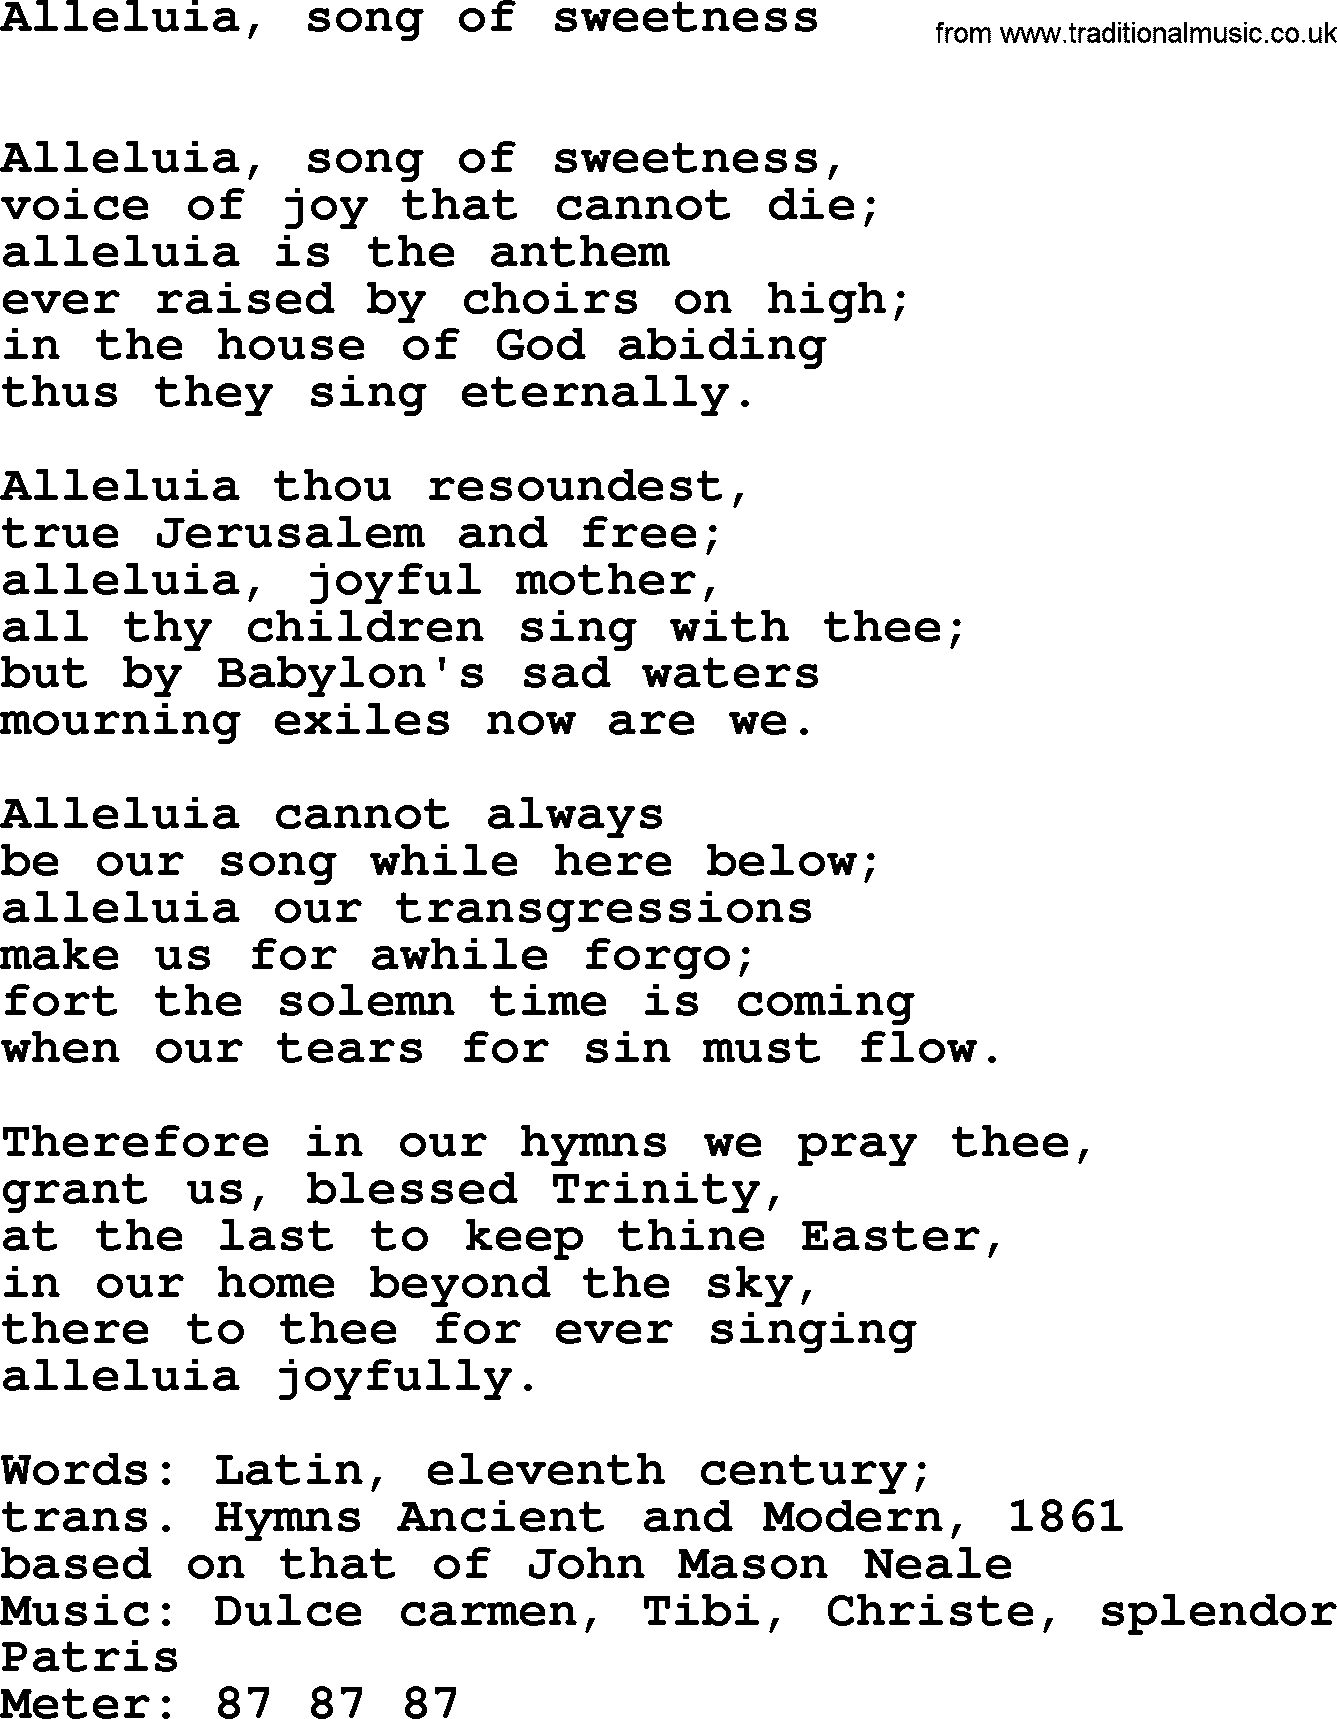 Book of Common Praise Hymn: Alleluia, Song Of Sweetness.txt lyrics with midi music